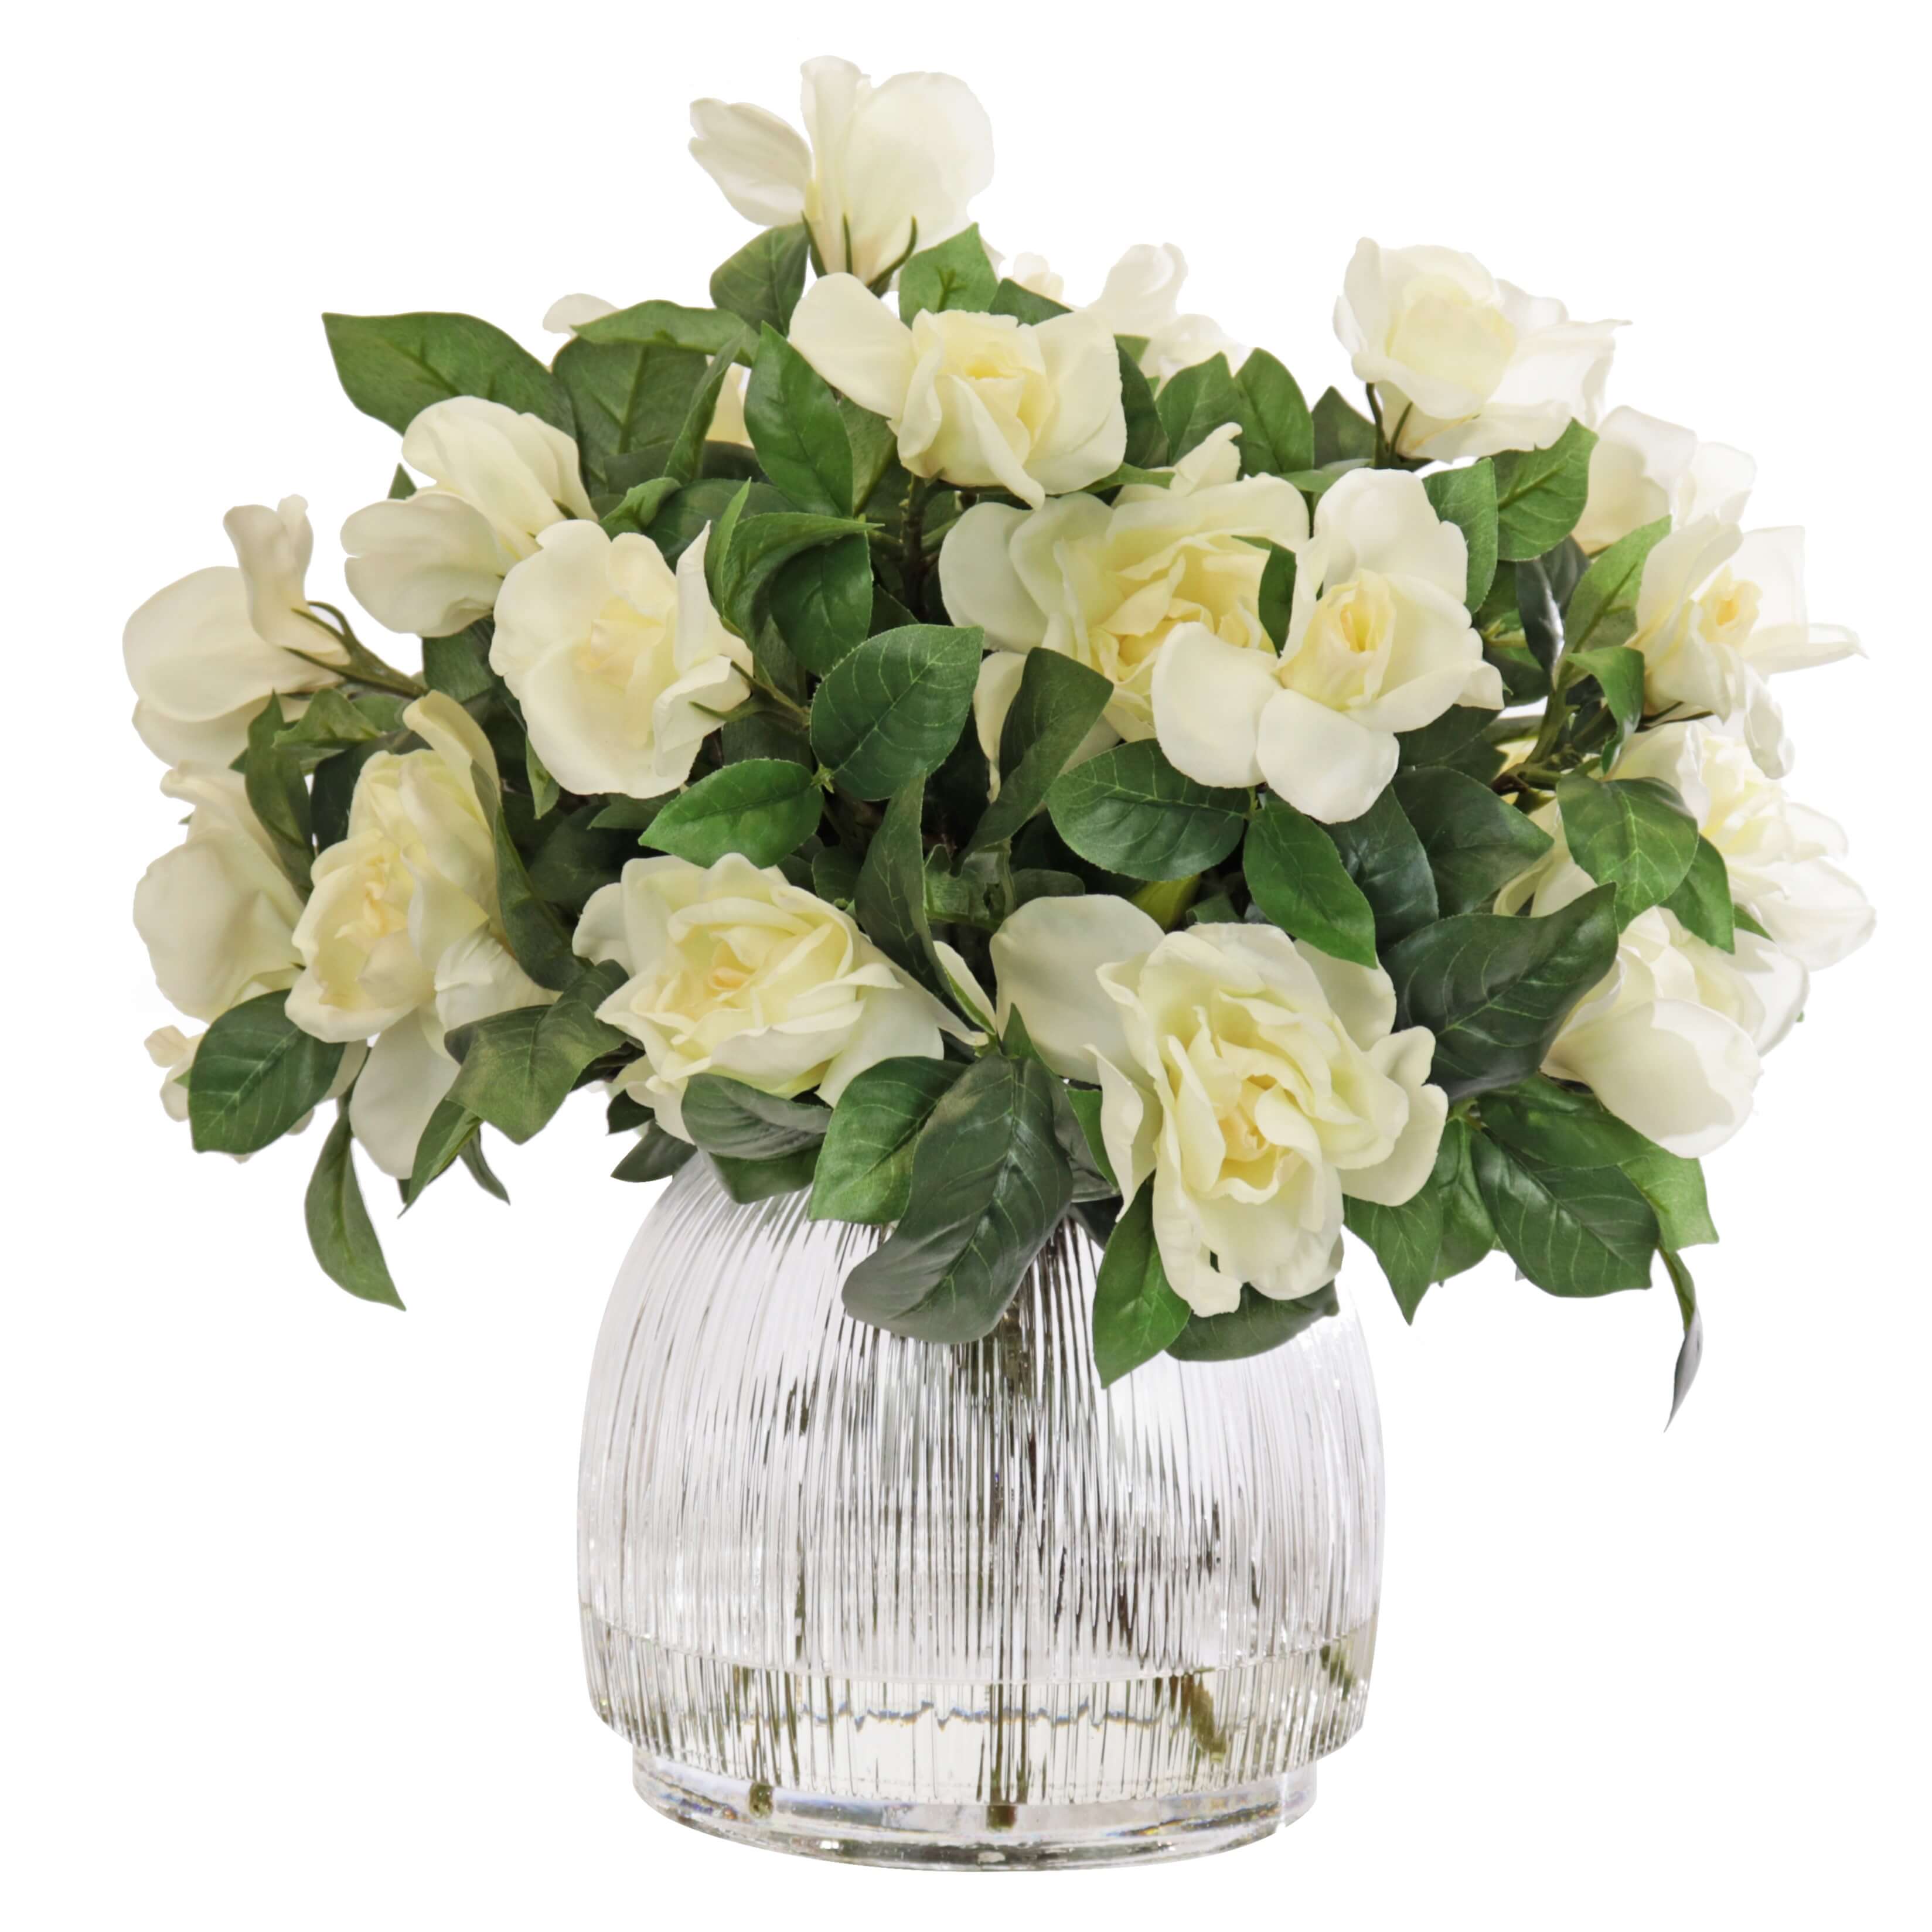 Faux white gardenia flower arrangement